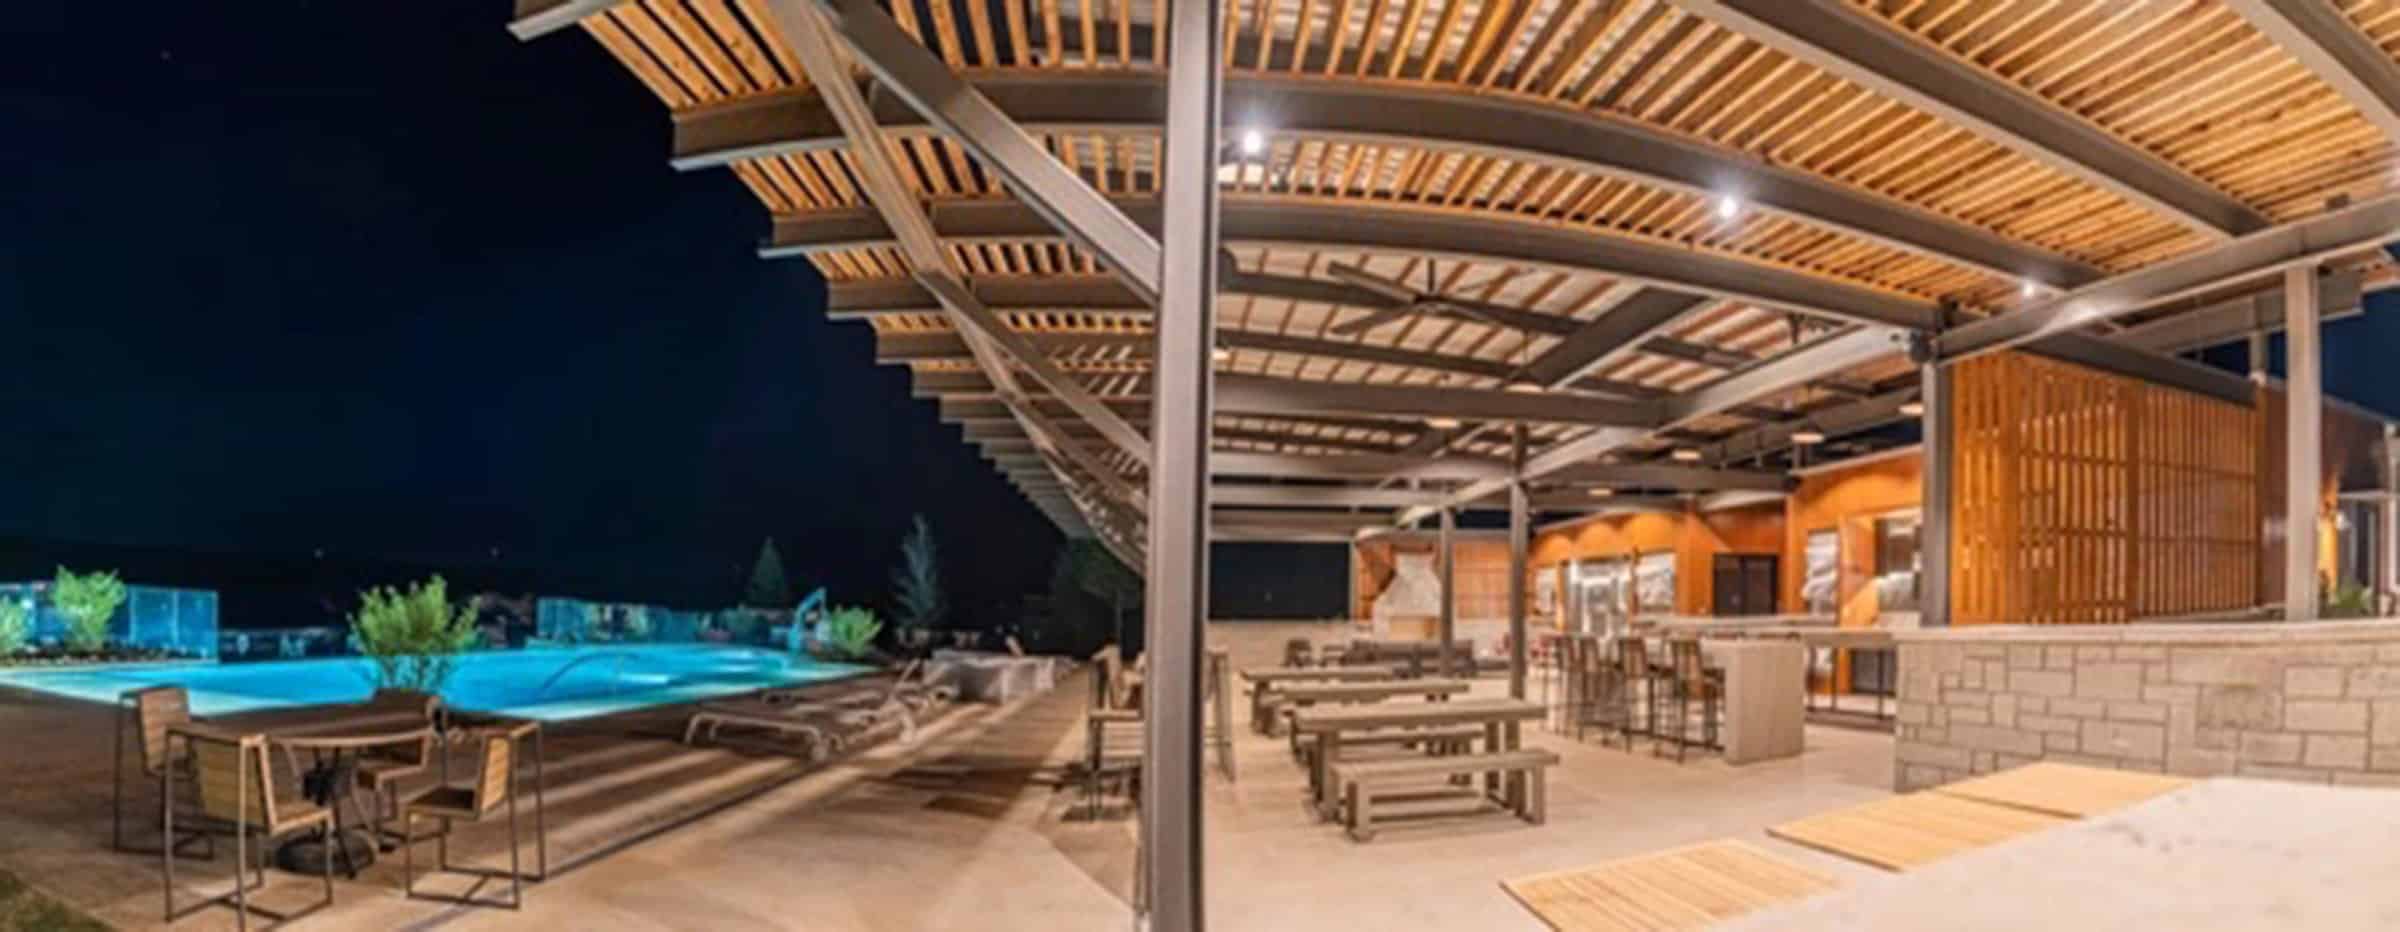 Resort Brings Luxury RV, Tiny Home Experience to Texas